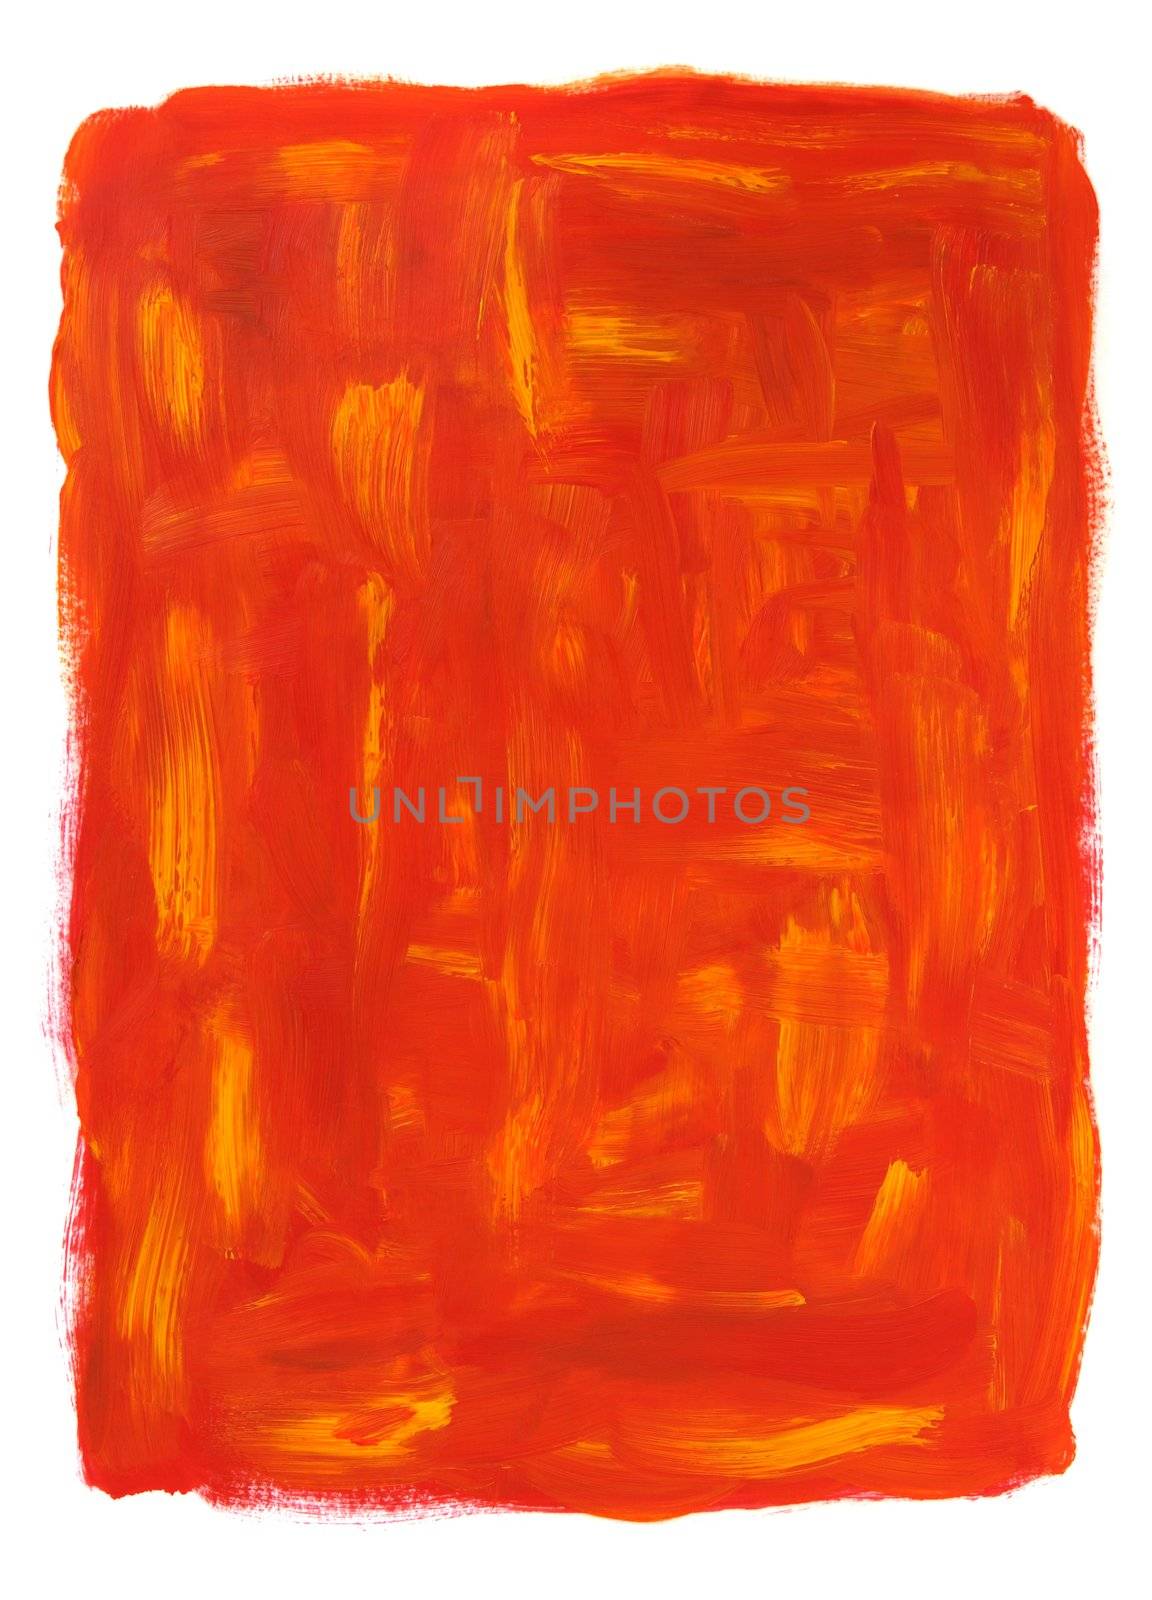 Vibrant orange abstract oil painting by anikasalsera